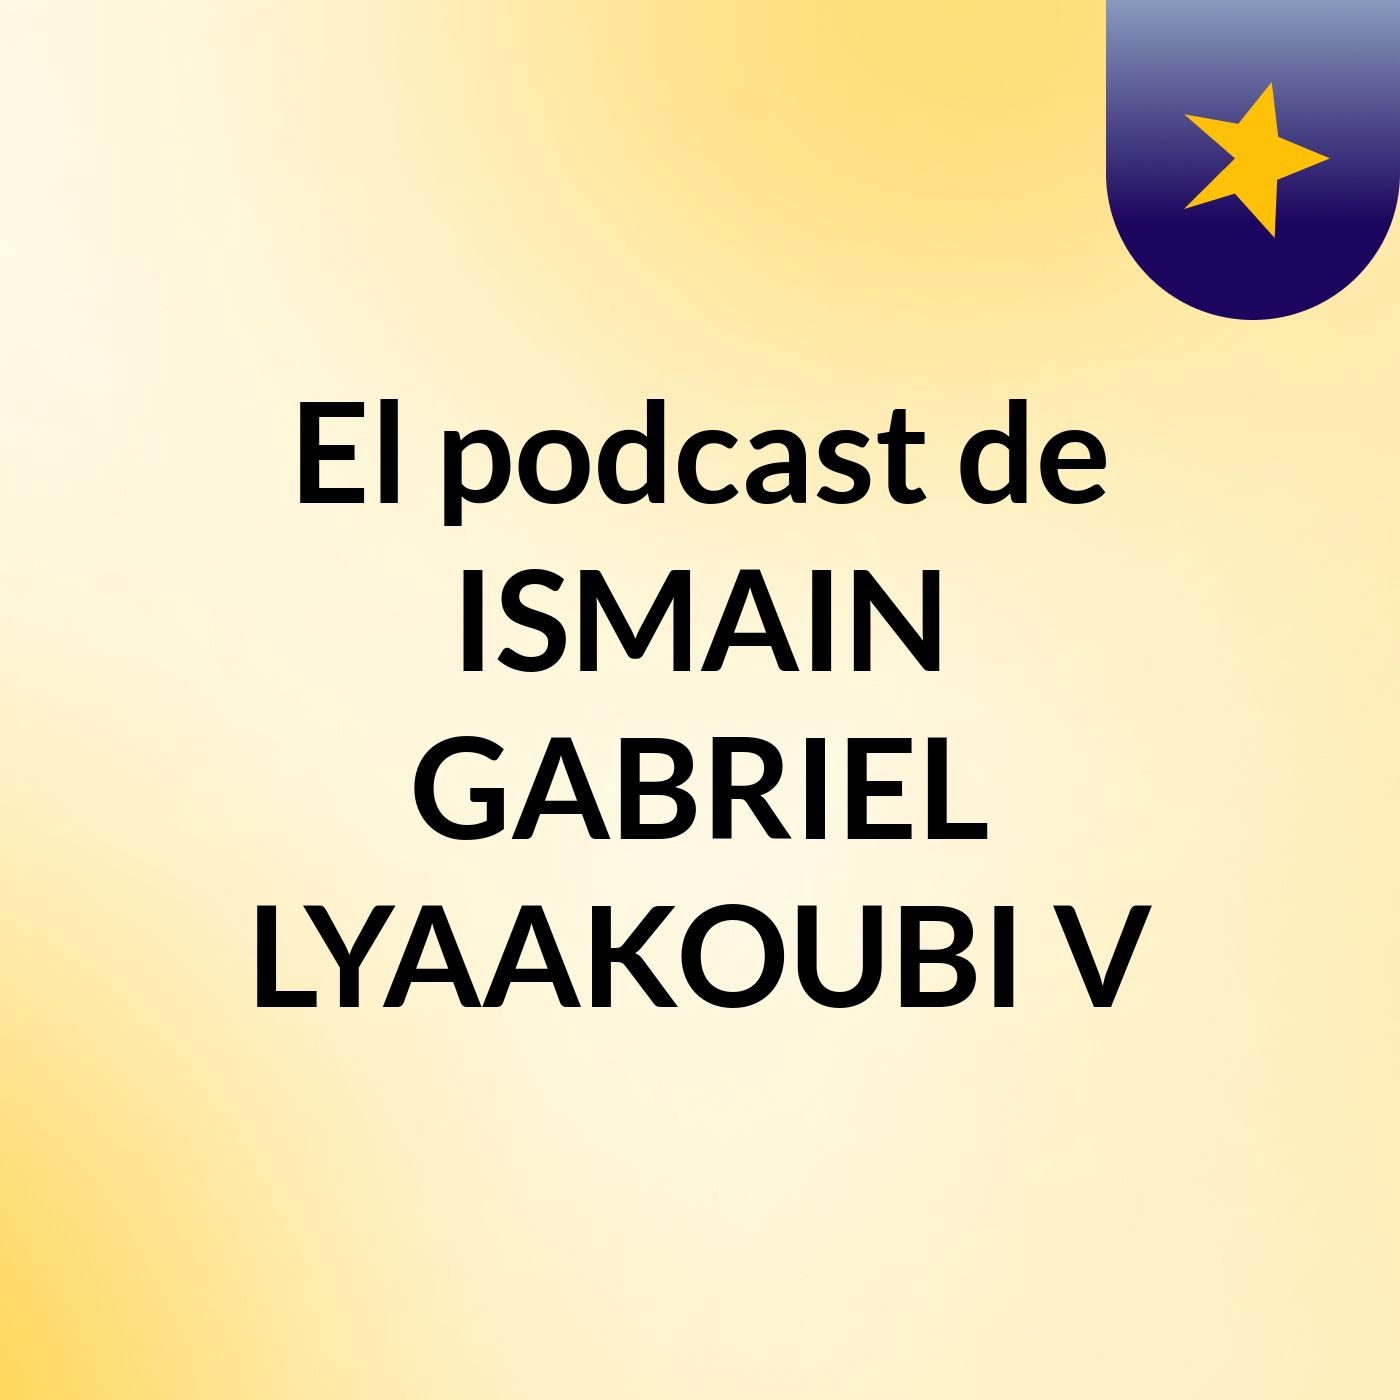 Episodio 2 - El podcast de ISMAIN GABRIEL LYAAKOUBI V